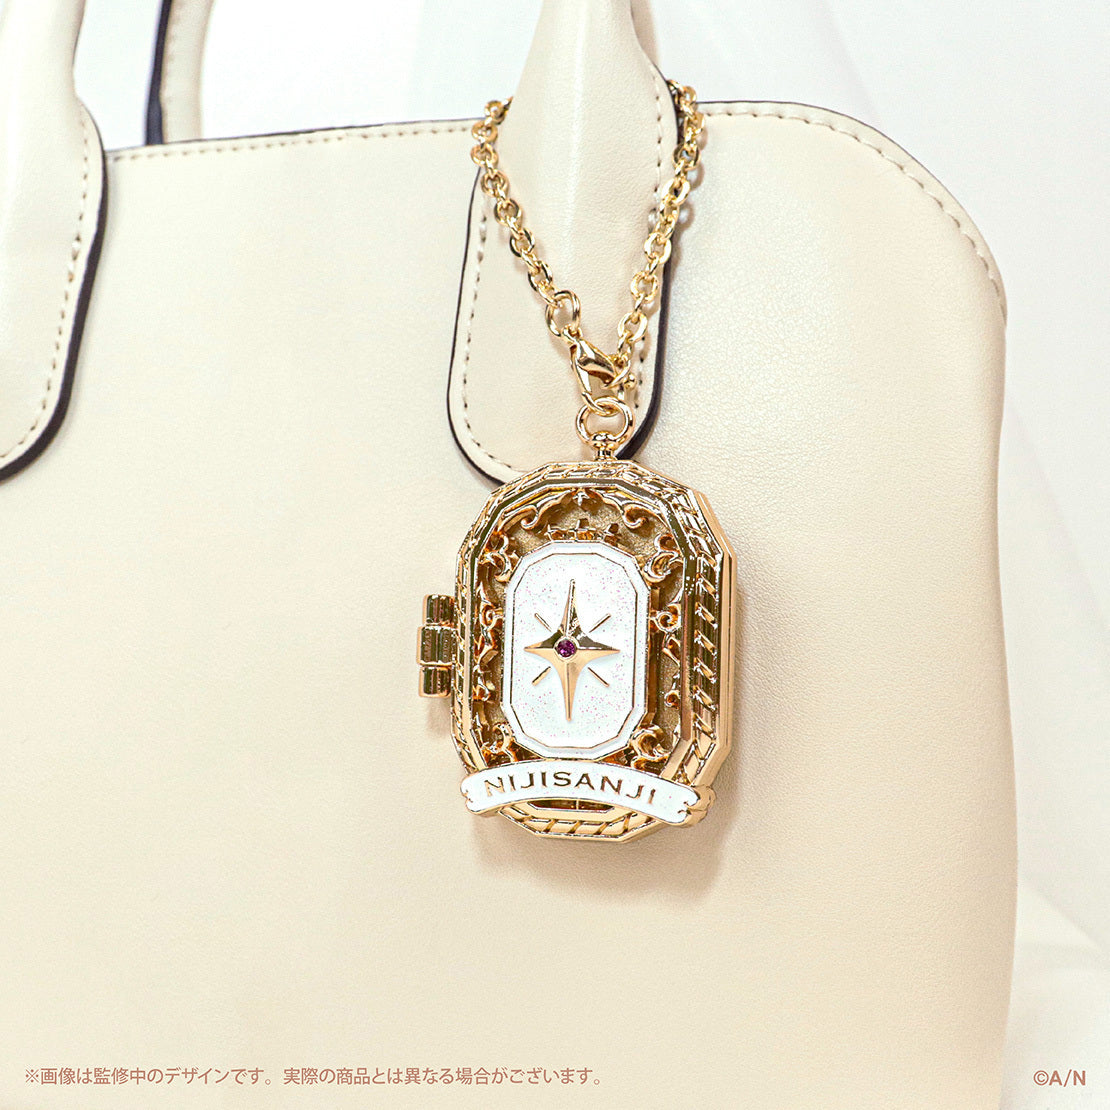 [In-stock] Nijisanji [NIJISANJI 6th Anniversary Commemorative Merchandise] Goods -  Acrylic Stand/Box Pendant